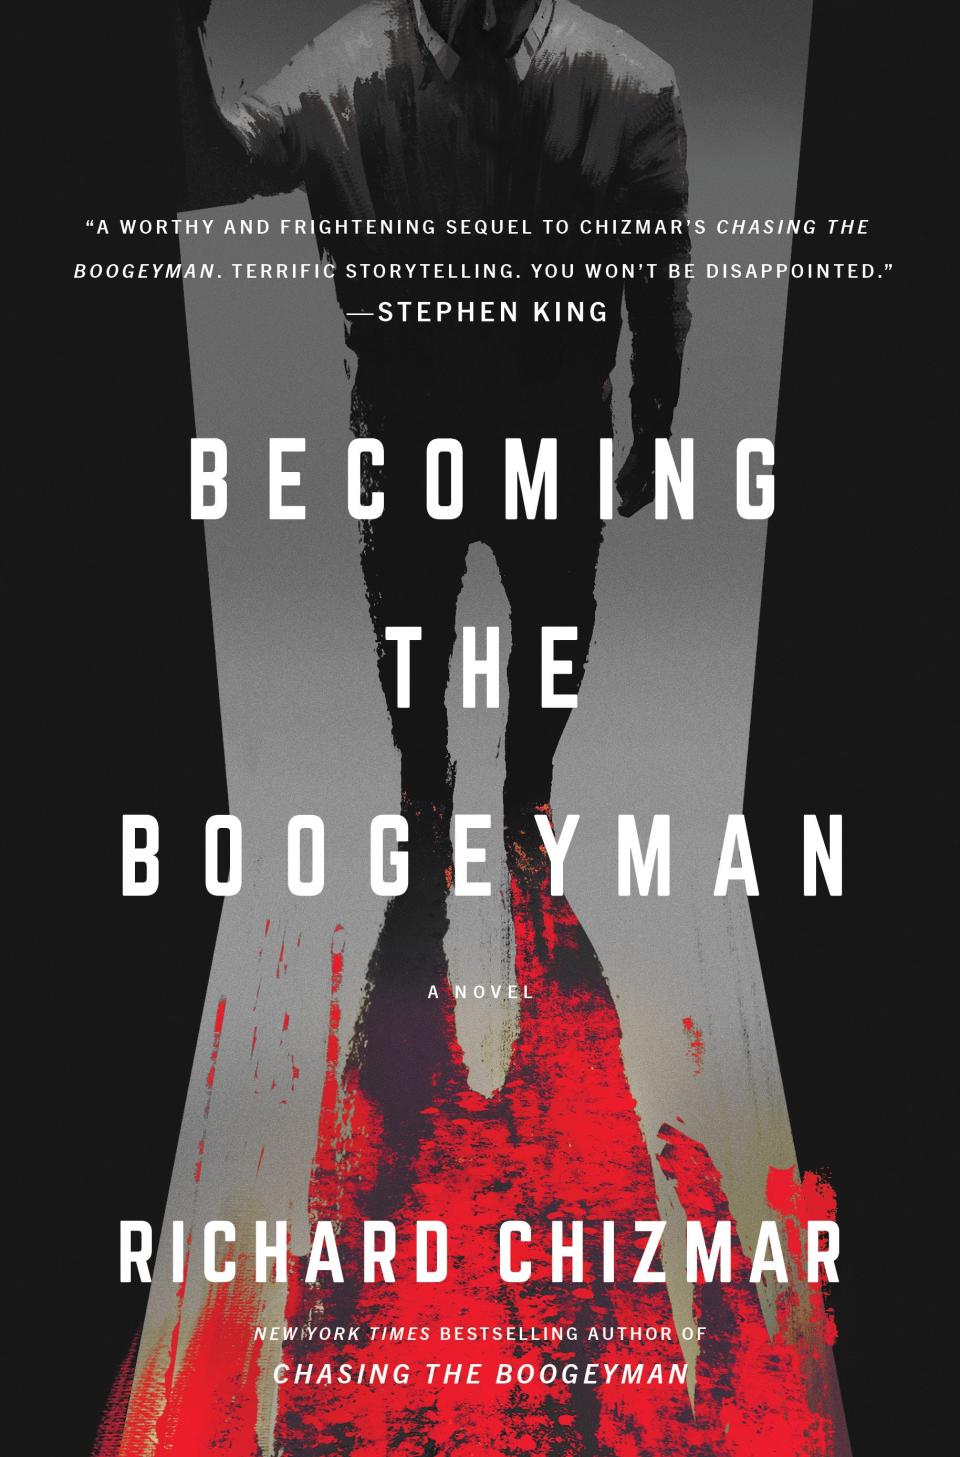 "Becoming the Boogeyman," by Richard Chizmar.